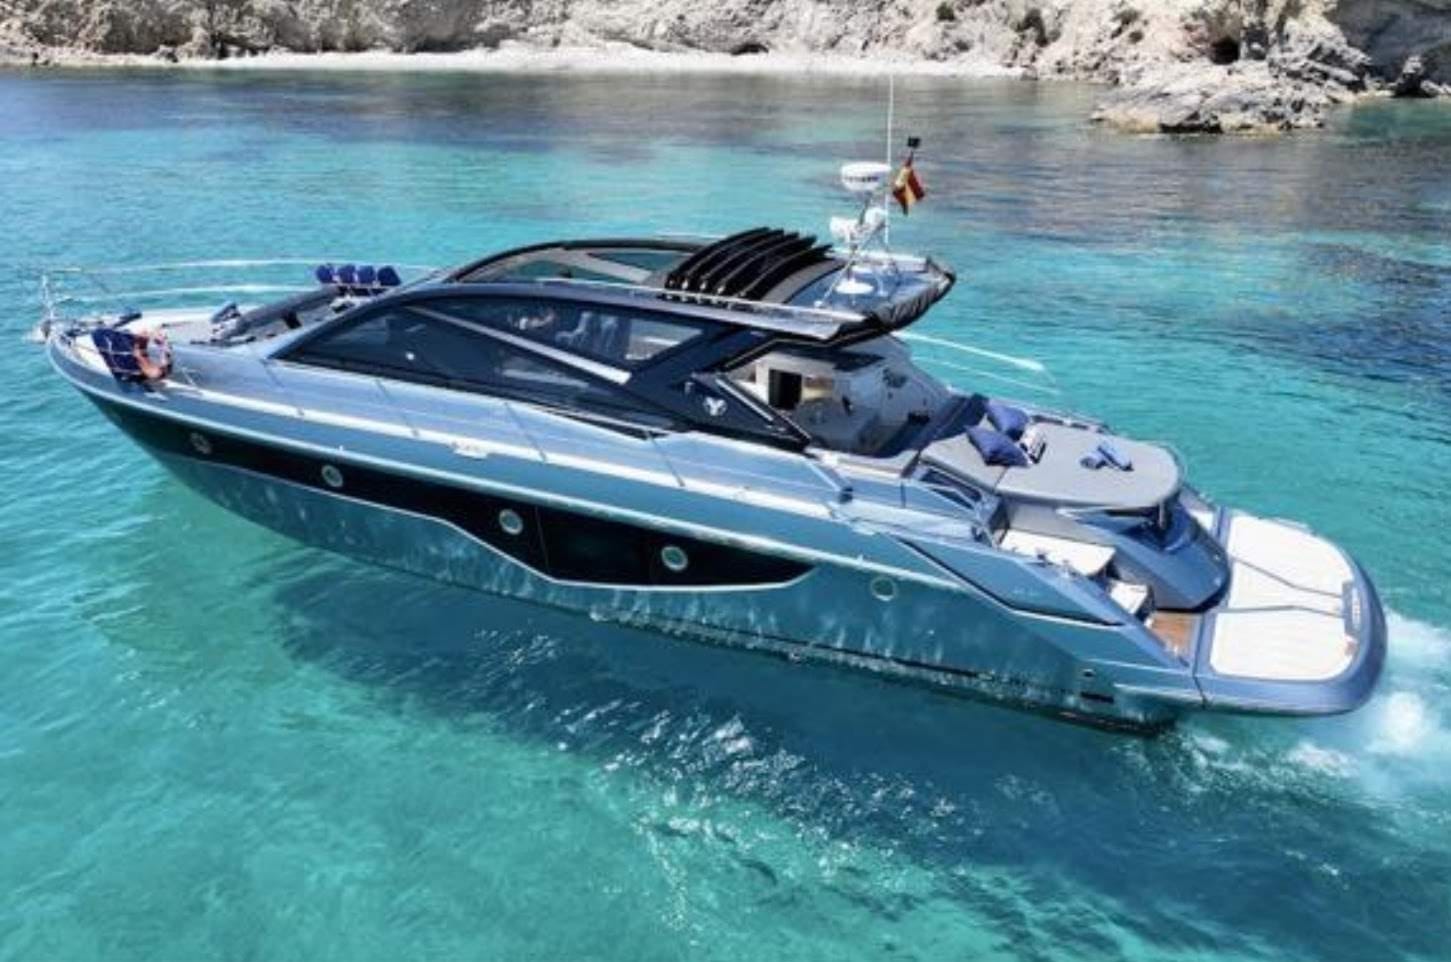 Power boat FOR CHARTER, year 2018 brand Cranchi and model 60ST, available in Puerto Deportivo El Masnou El Masnou Barcelona España